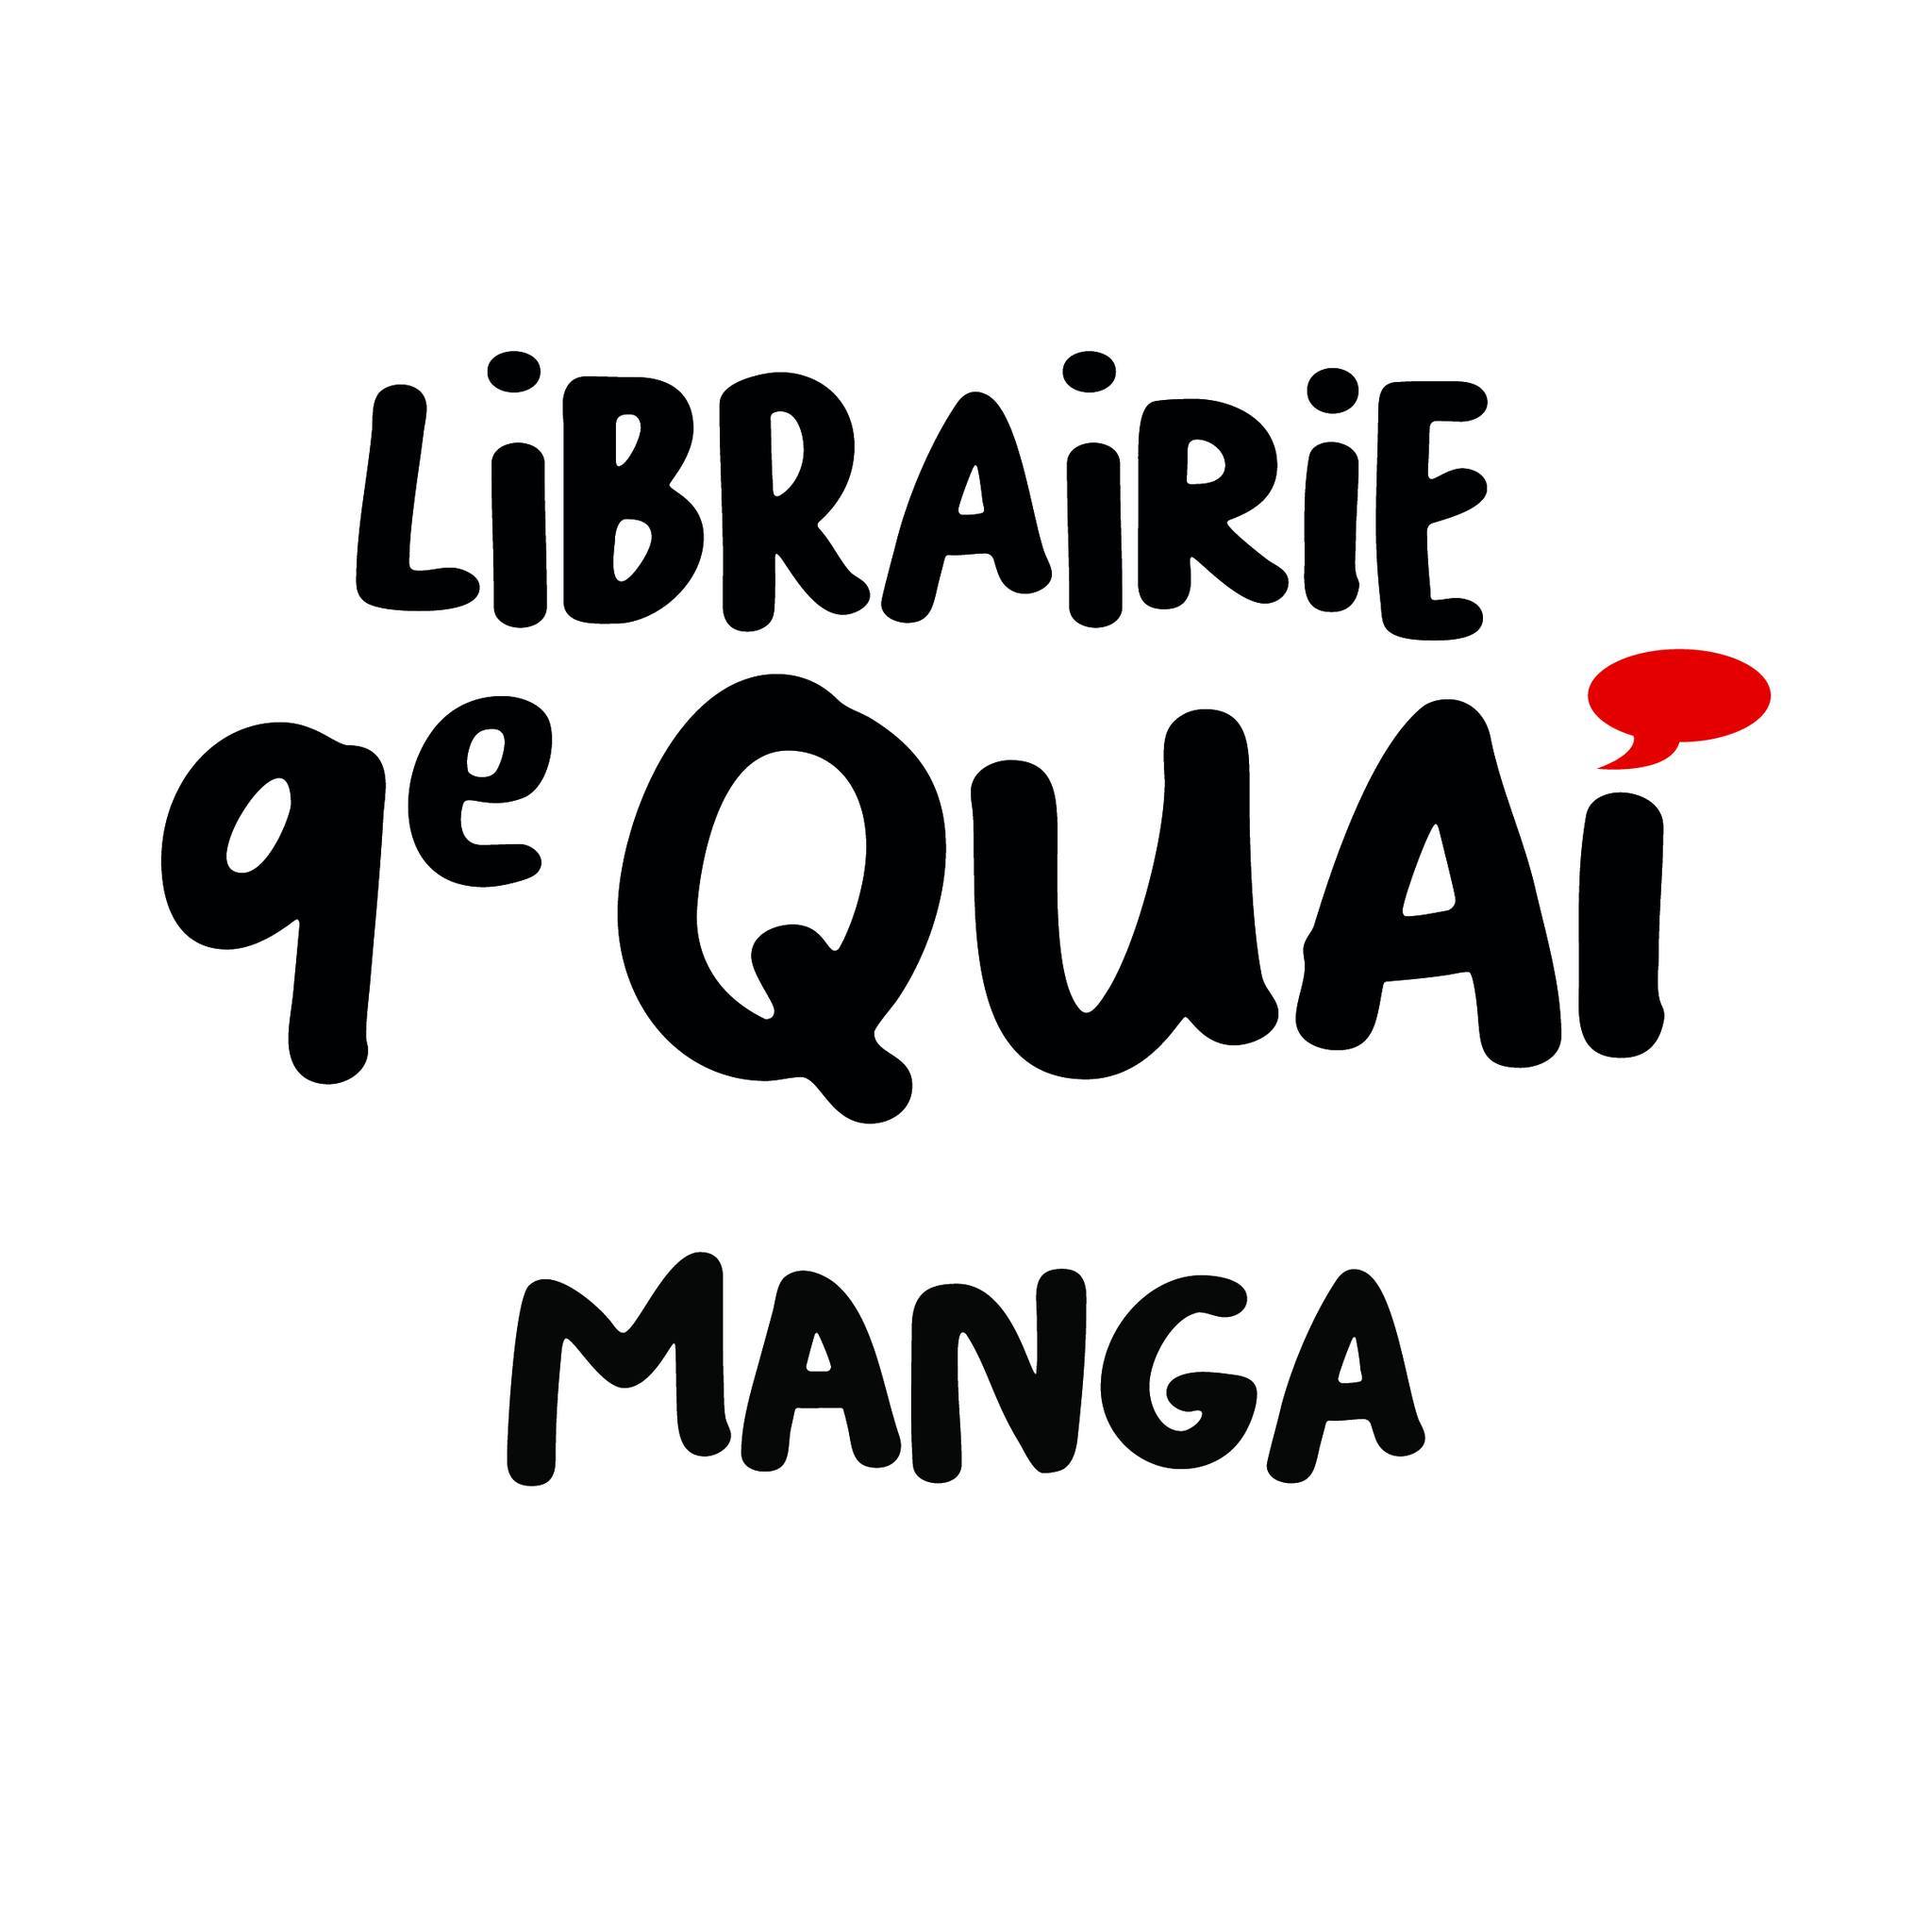 Librairie 9e quai - Manga